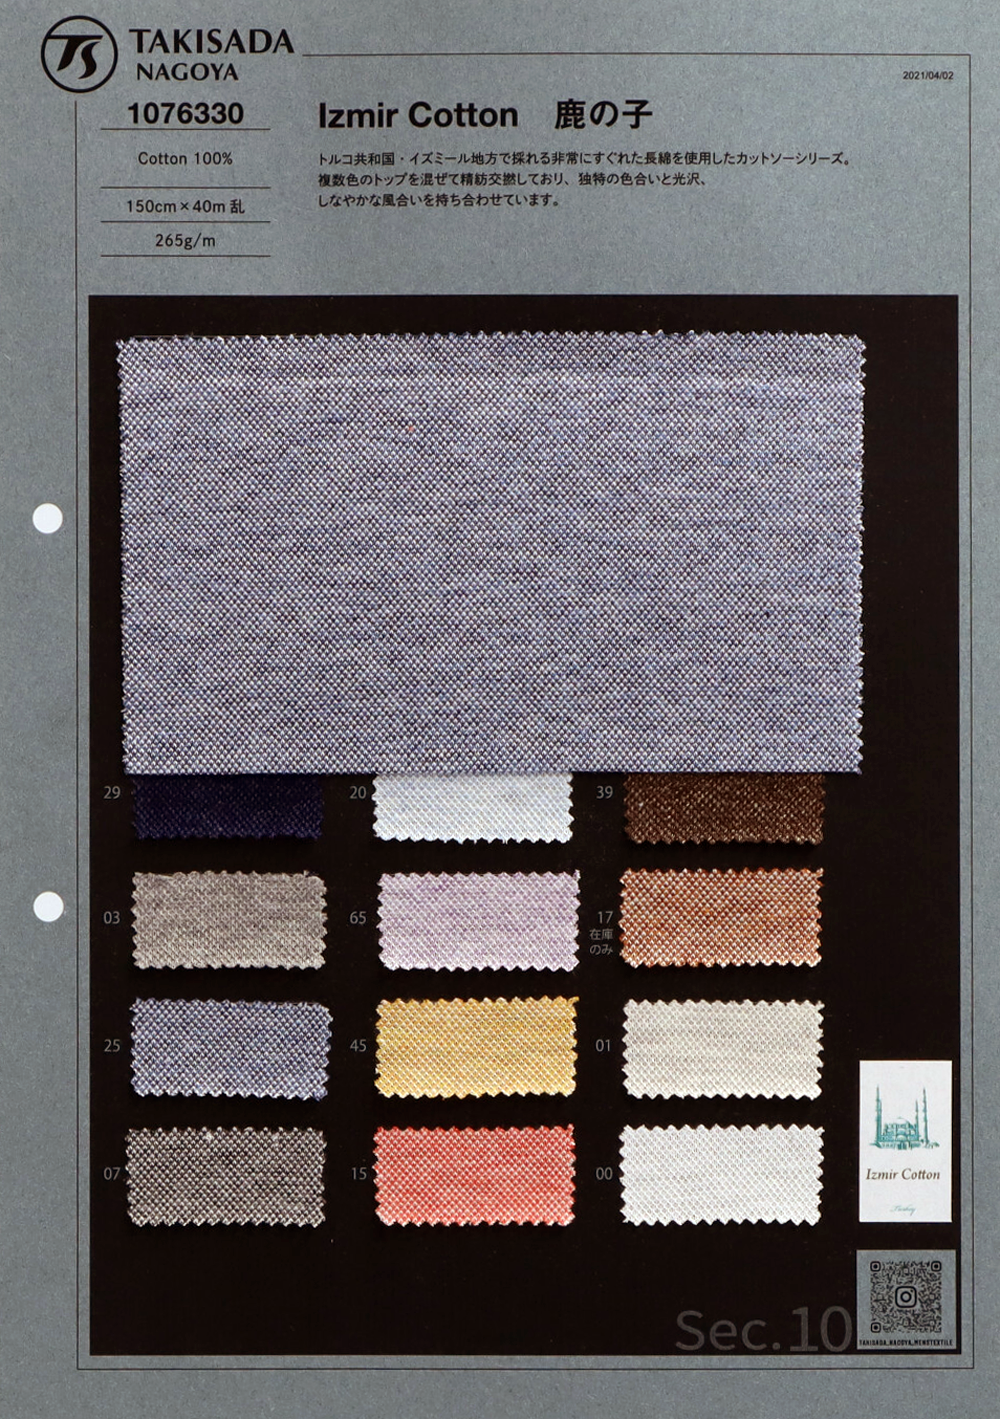 1076330 Izmir Cotton Moss Stitch[Textile / Fabric] Takisada Nagoya